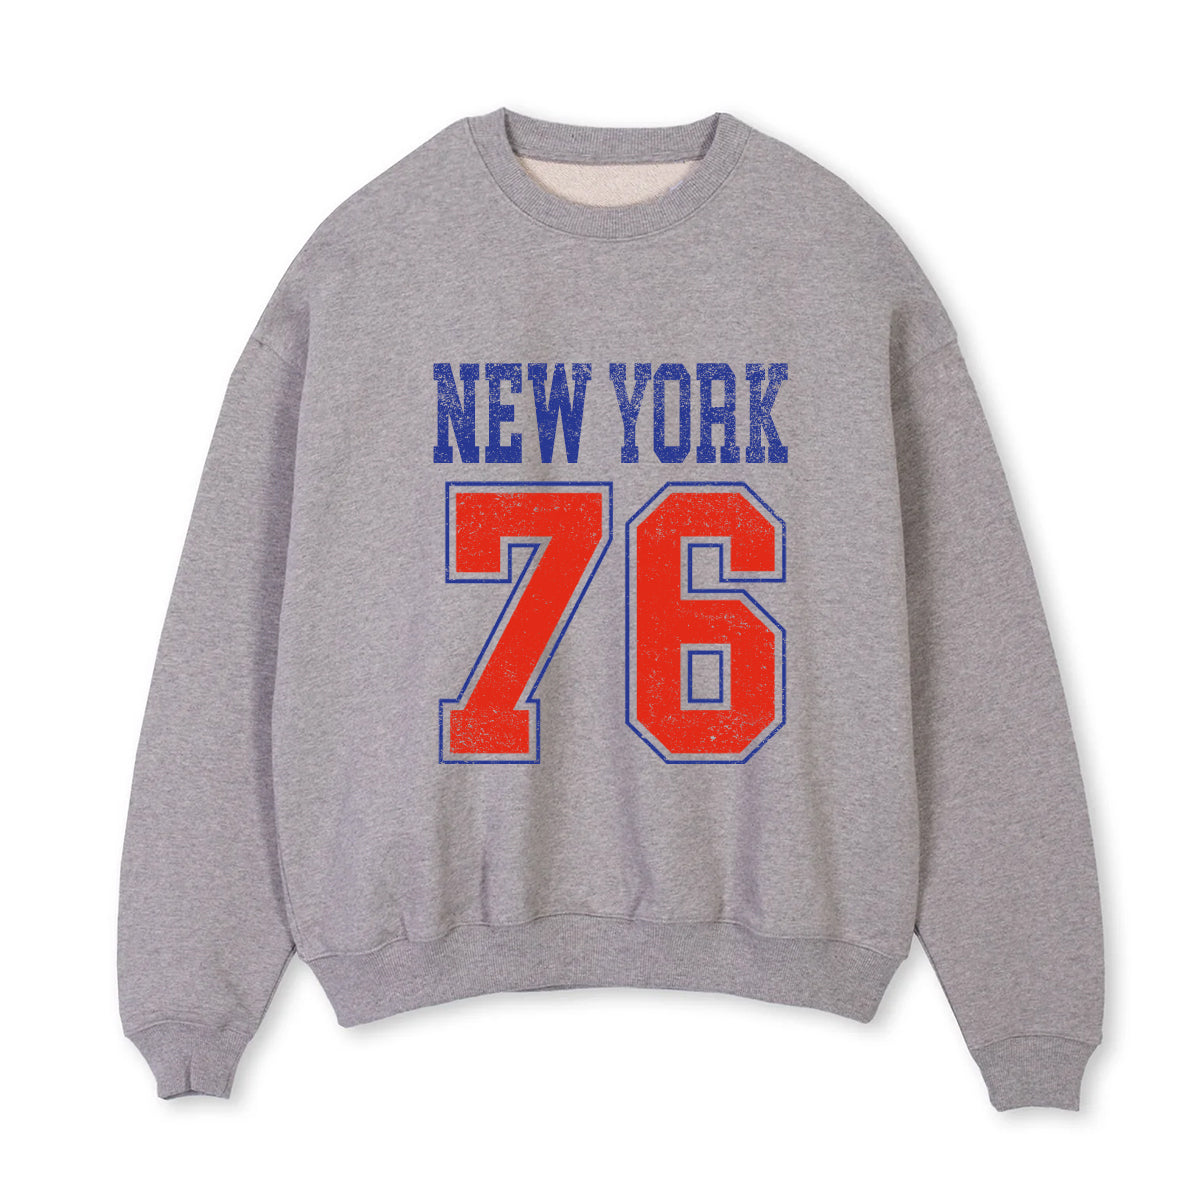 New York 76 Sweatshirt